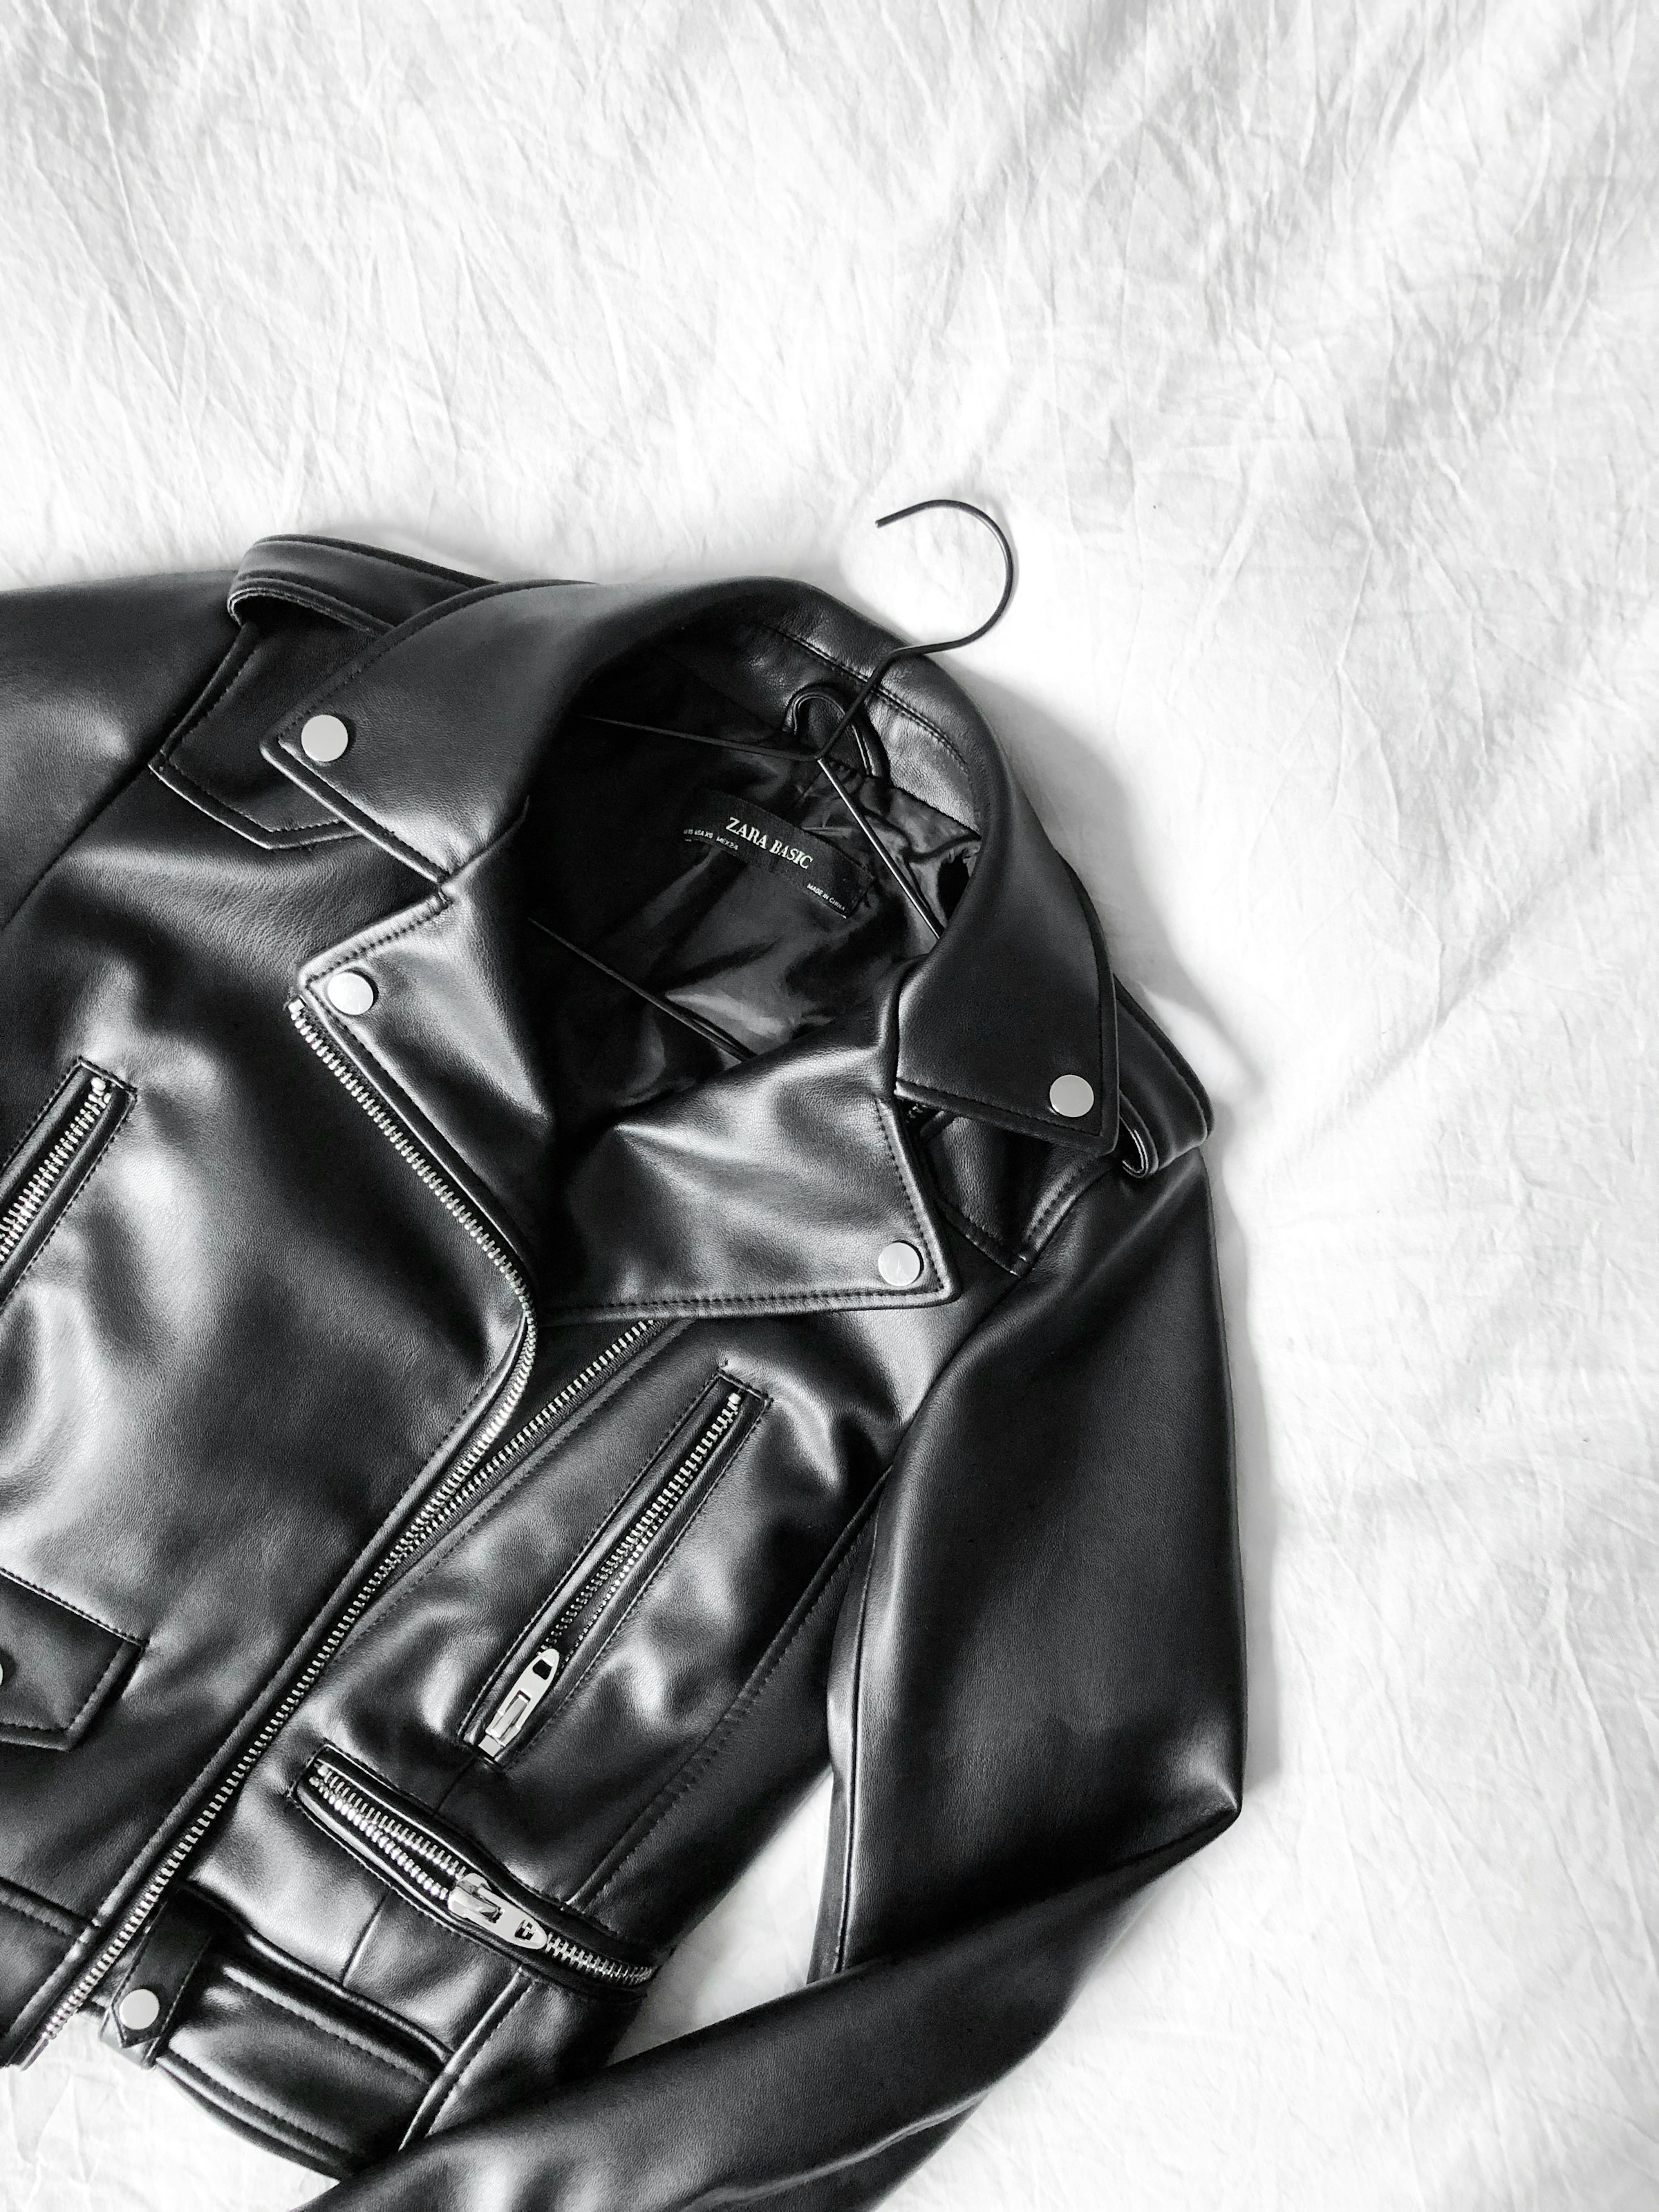 A black jacket lying on a bed | Source: Unsplash